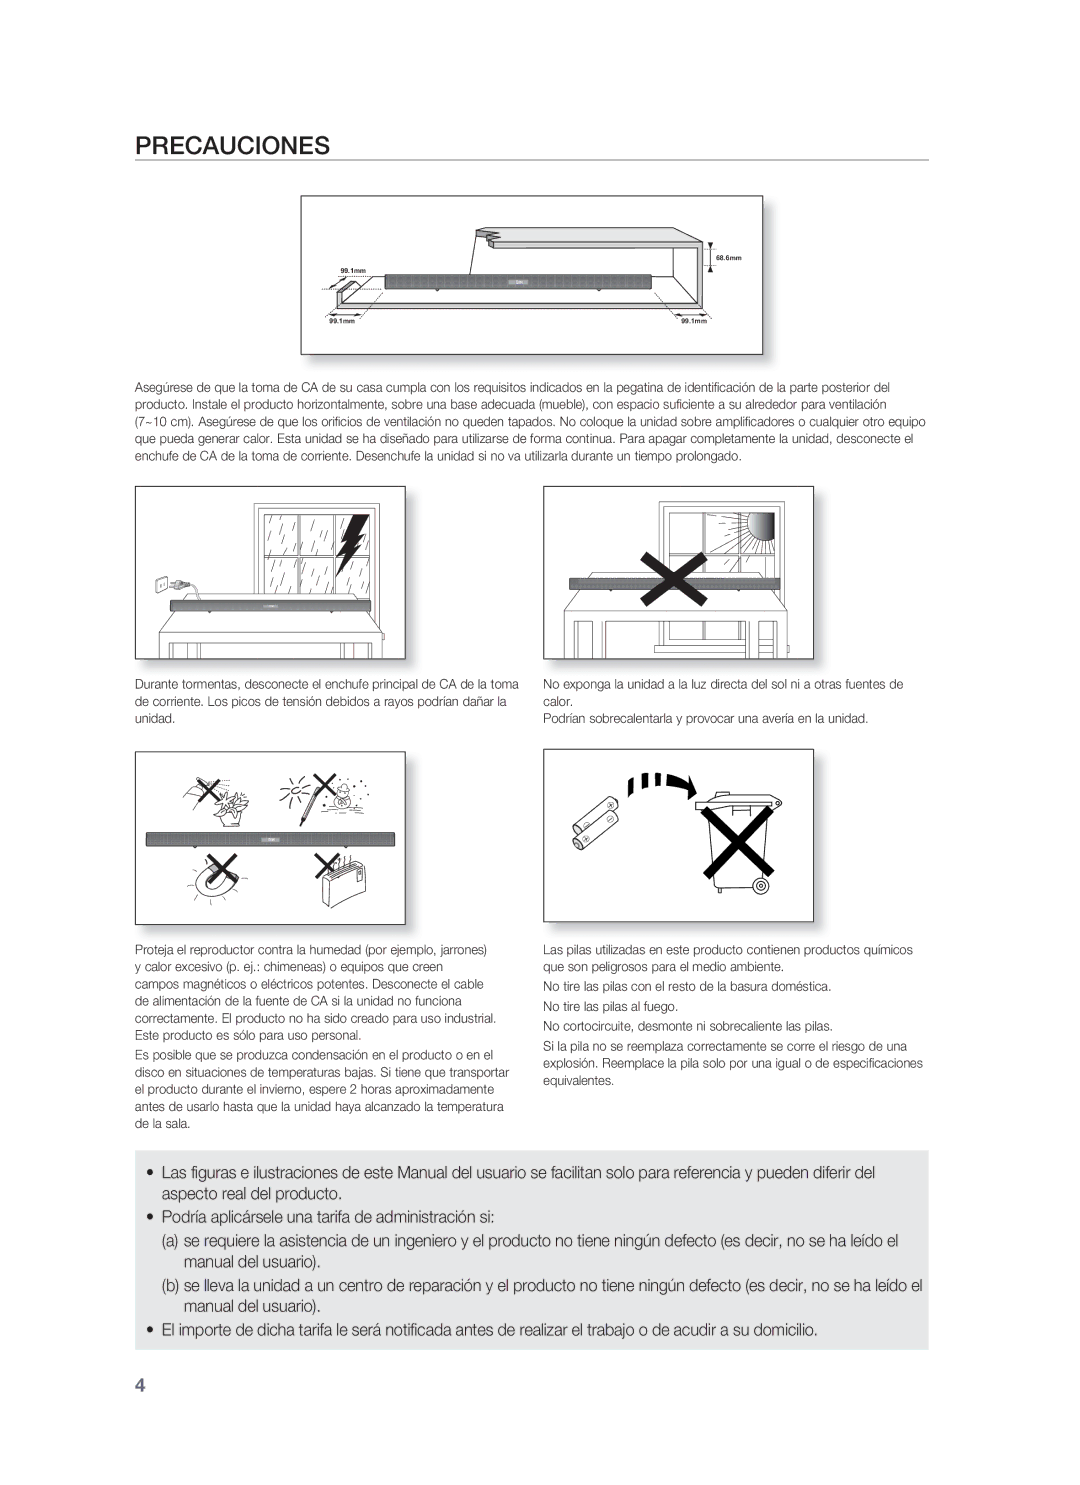 Samsung HW-F850/ZF manual Precauciones 